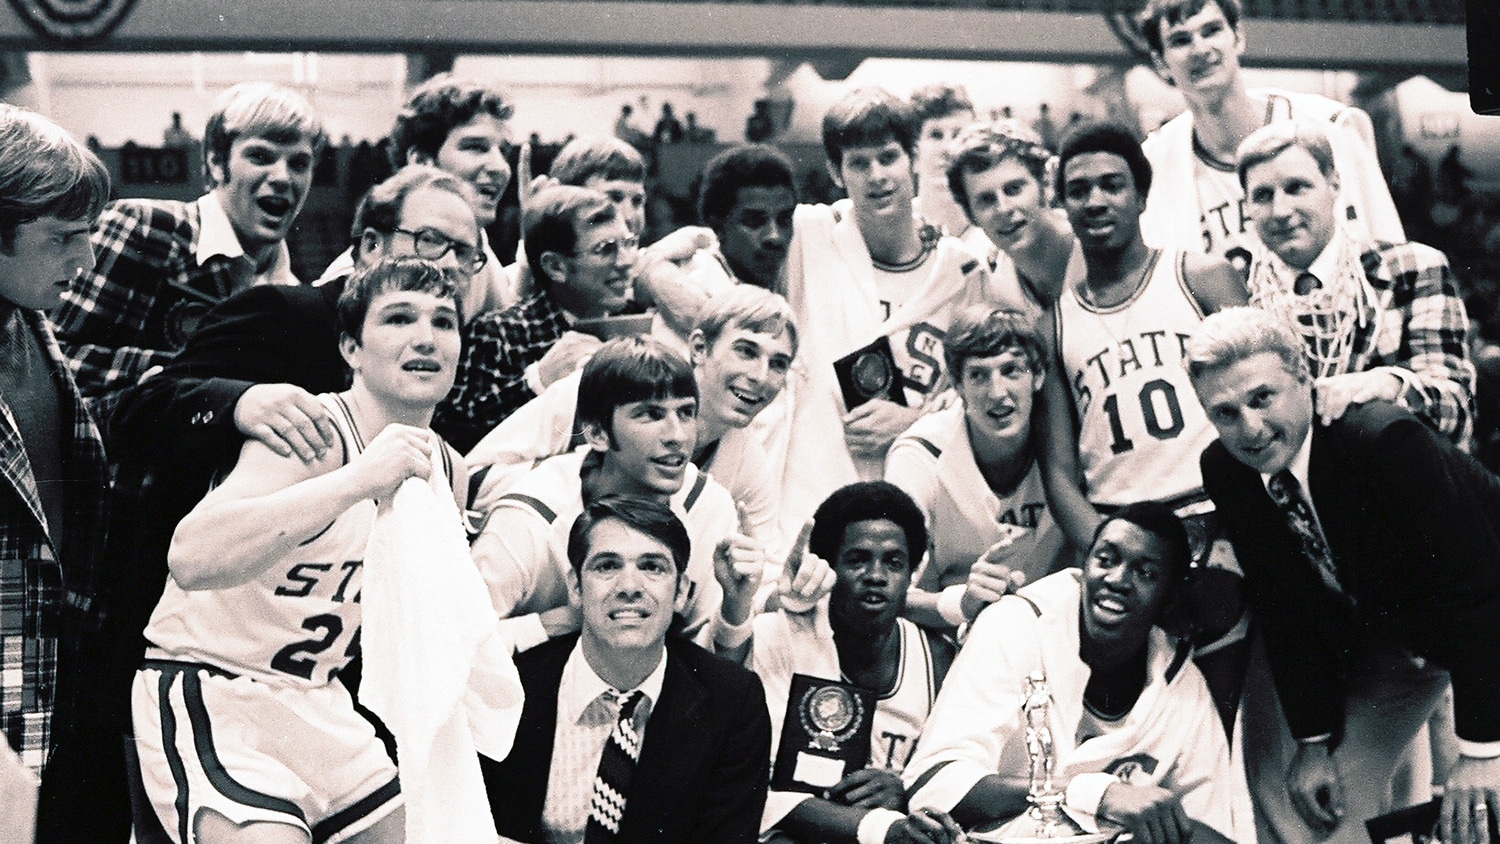 black and white image of 1974 NCAA Champion basketball team